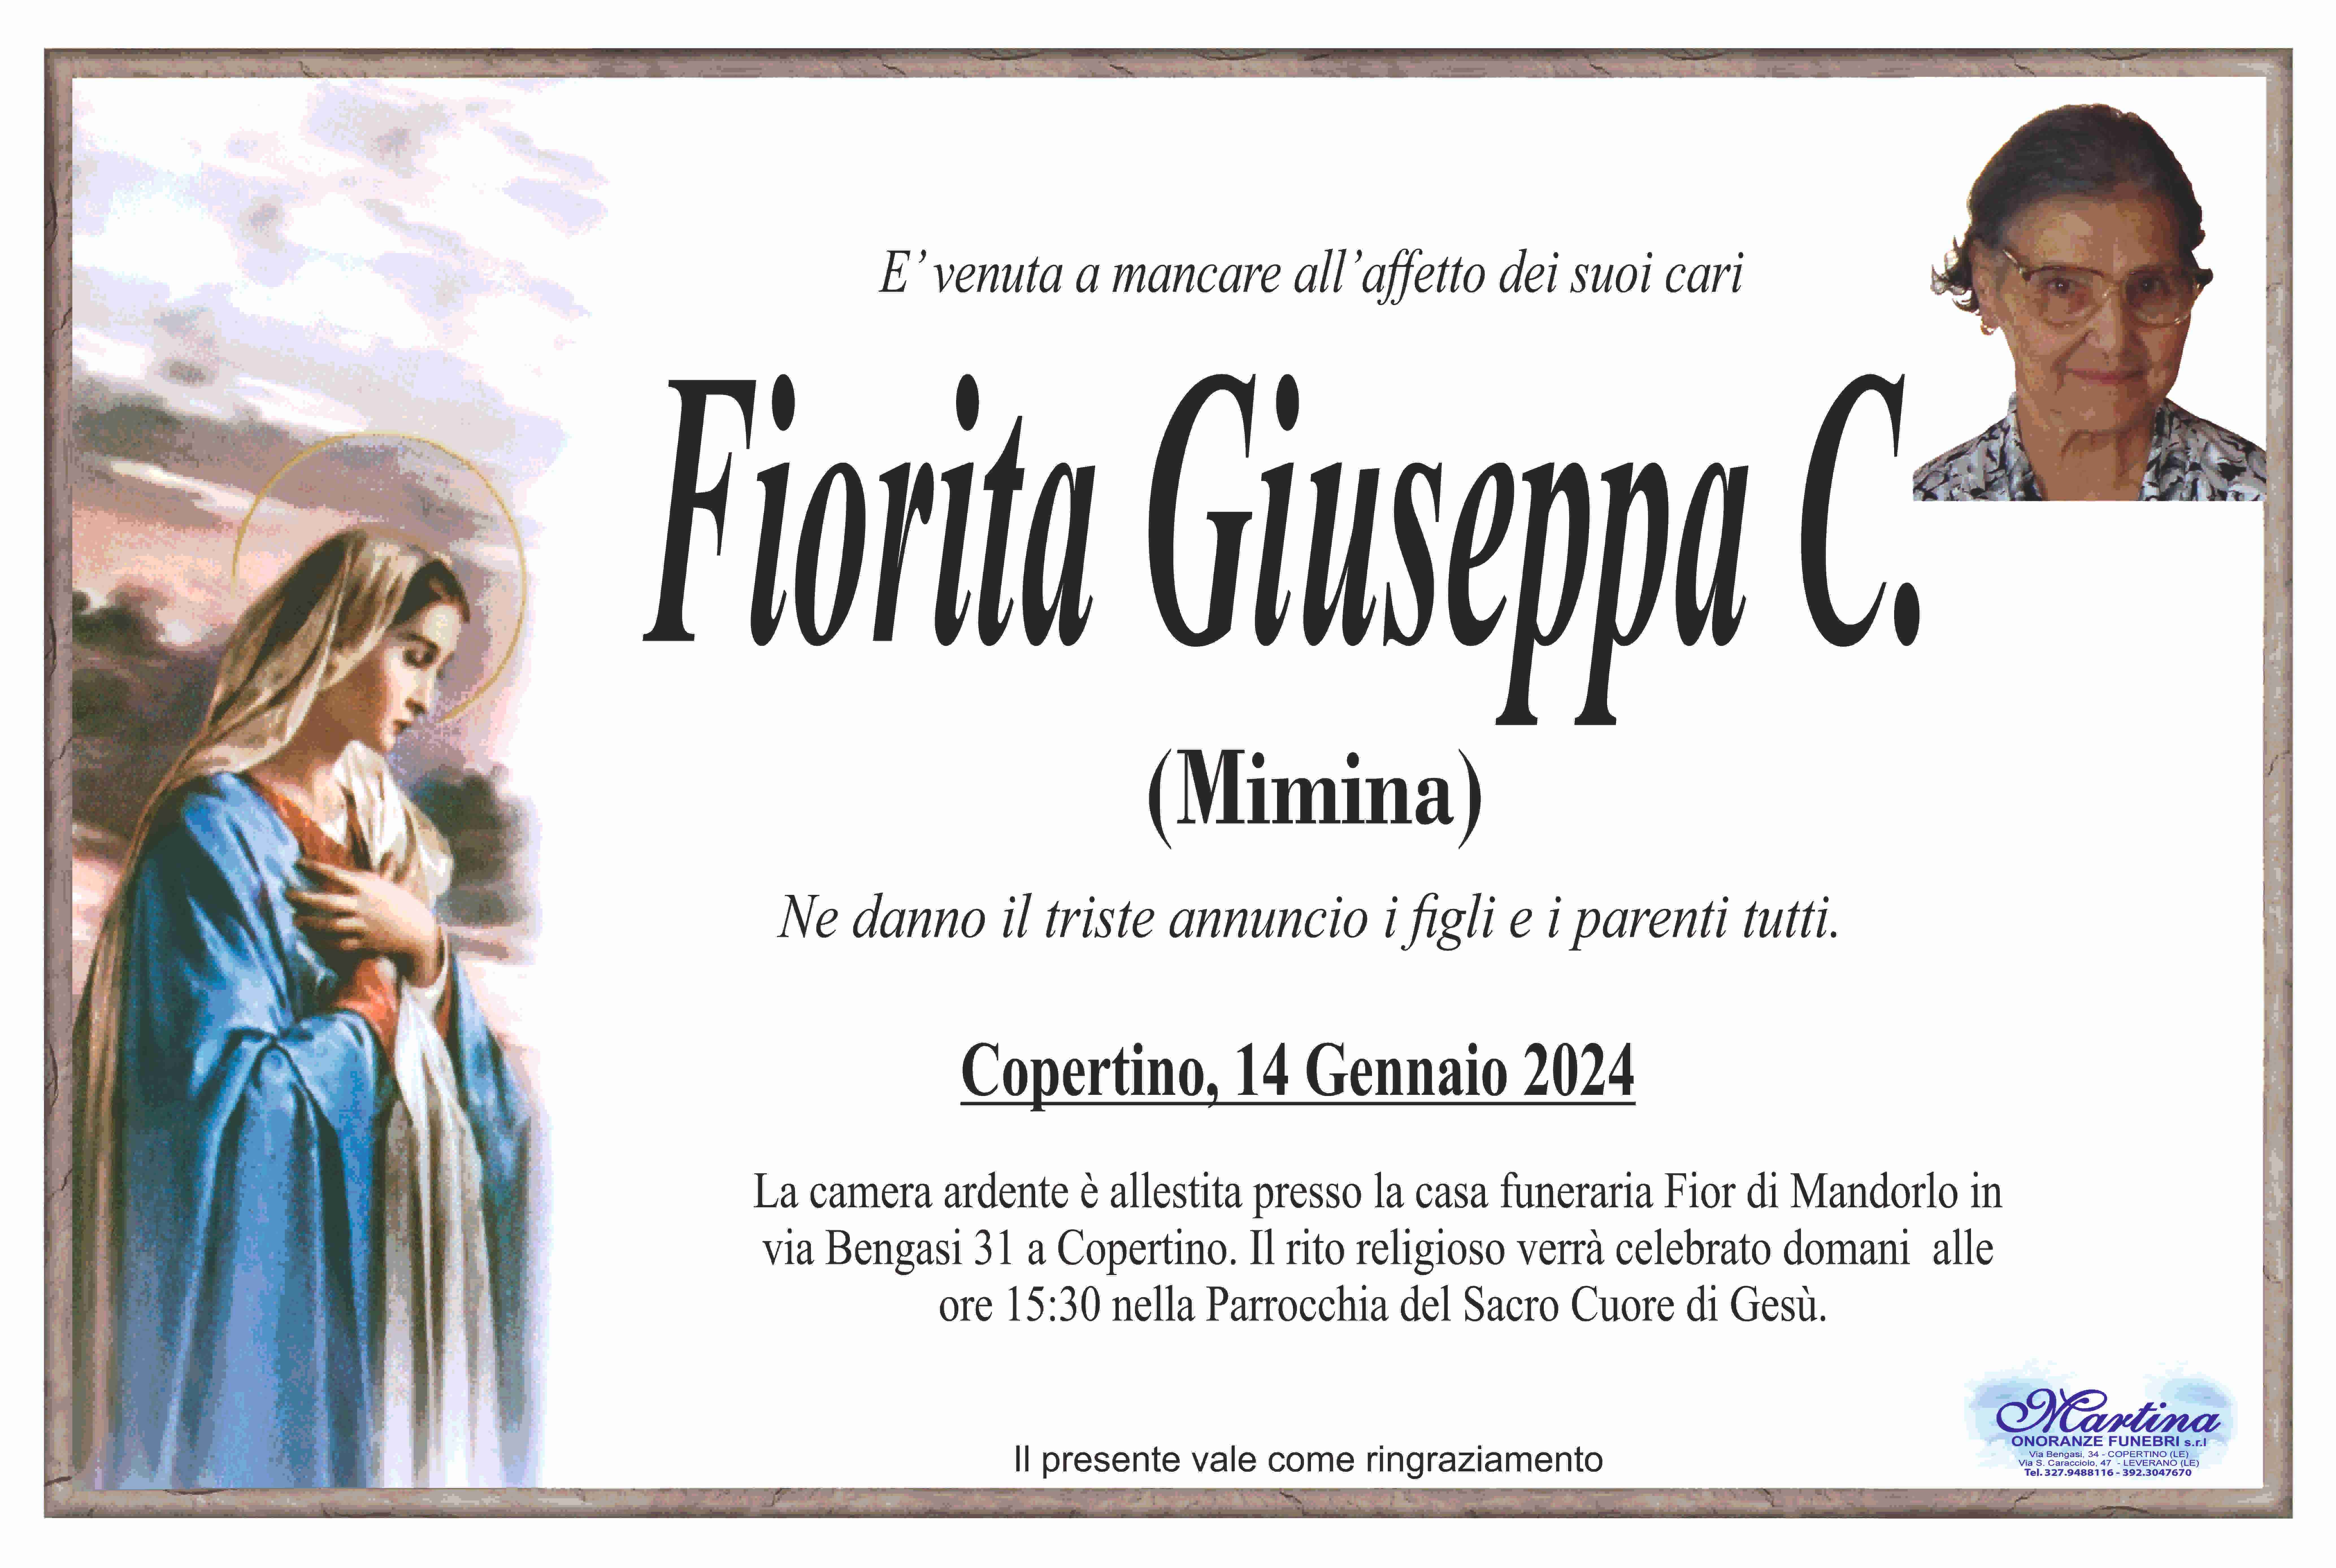 Giuseppa Cosima Fiorita